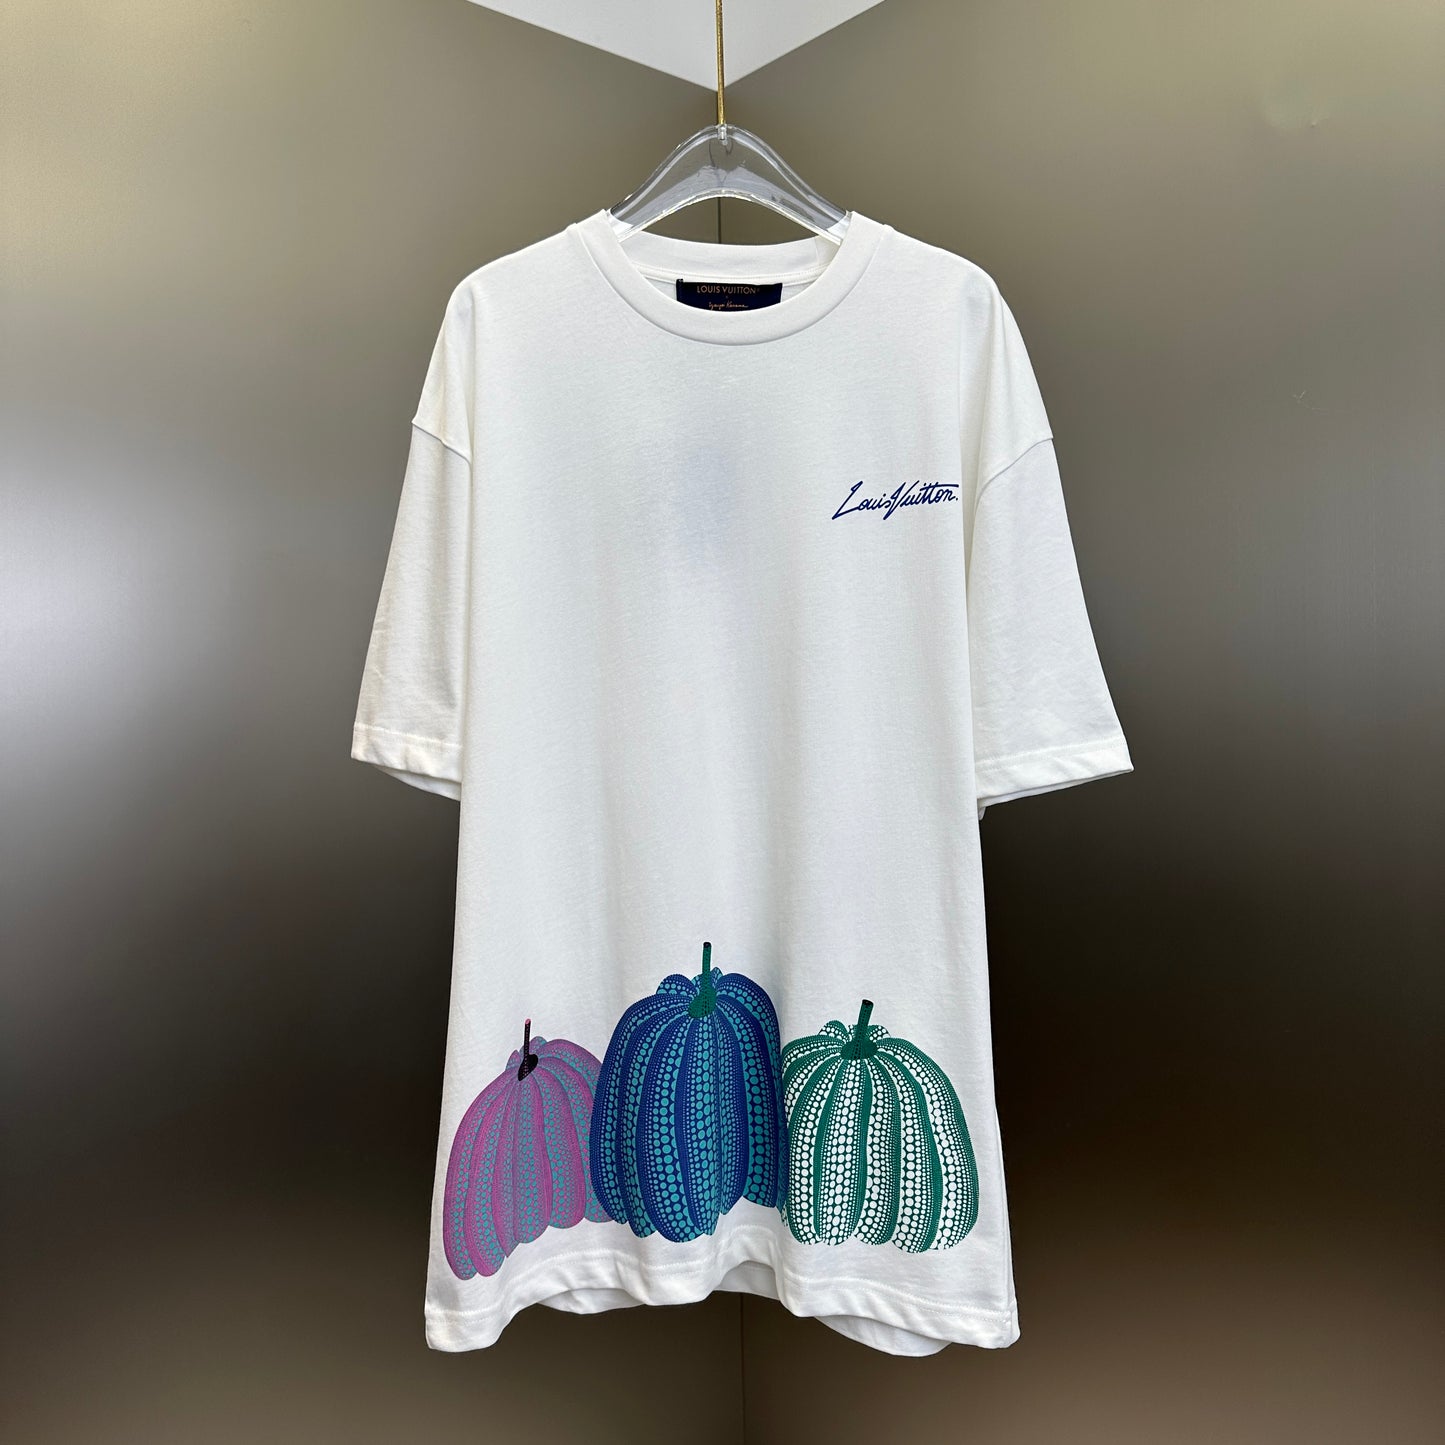 Louis Vuitton Rainbow Printed Tee Shirt milky white sz L